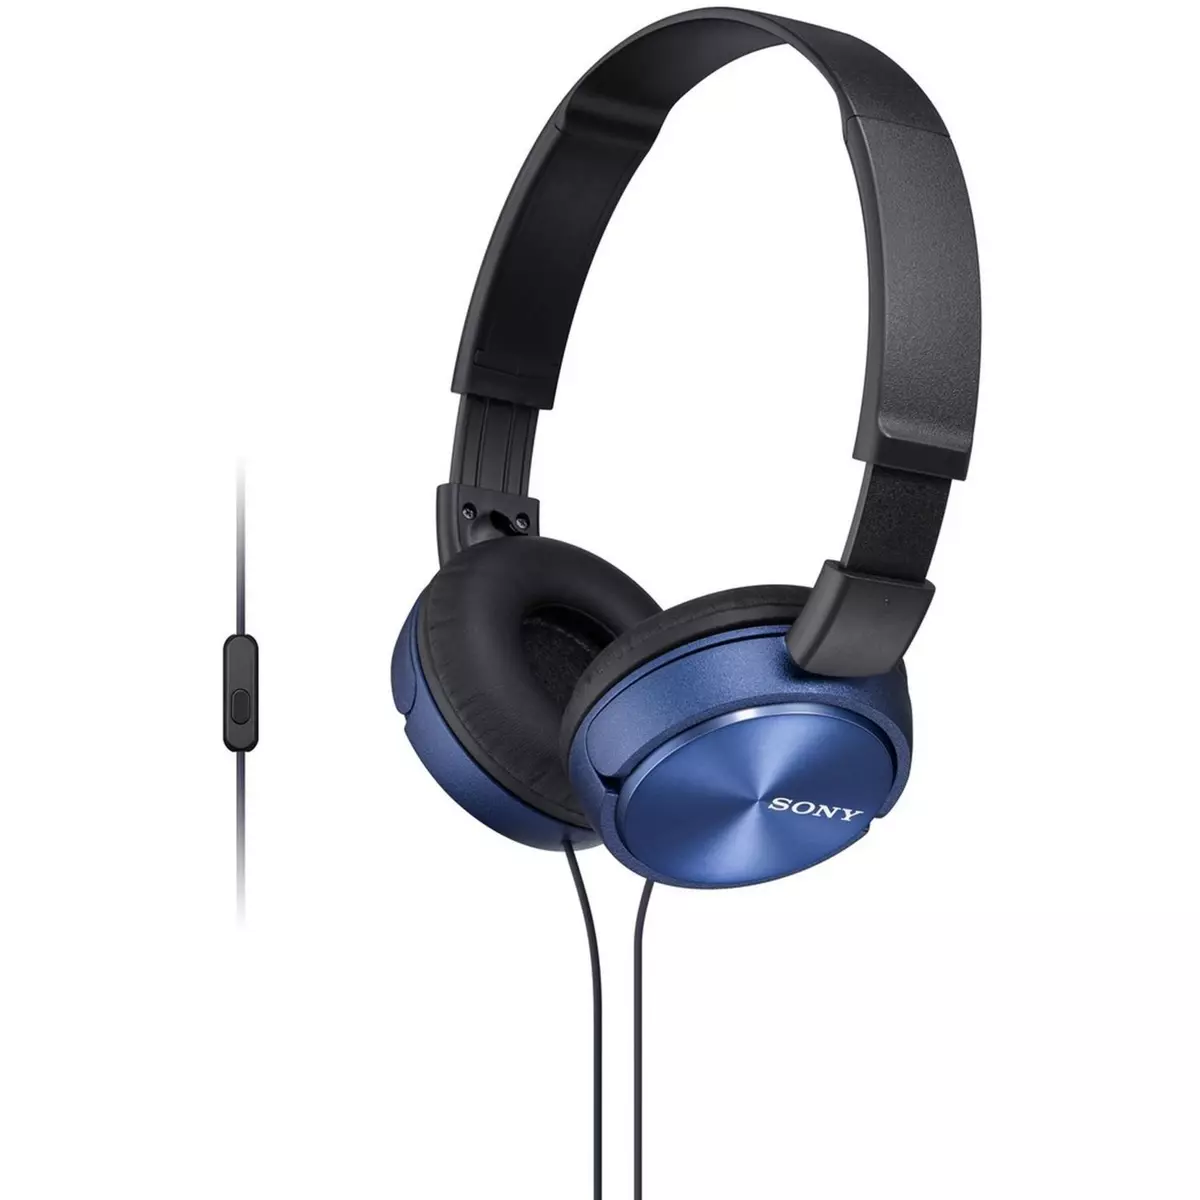 SONY Casque audio filaire - Bleu - MDR ZX310 APB